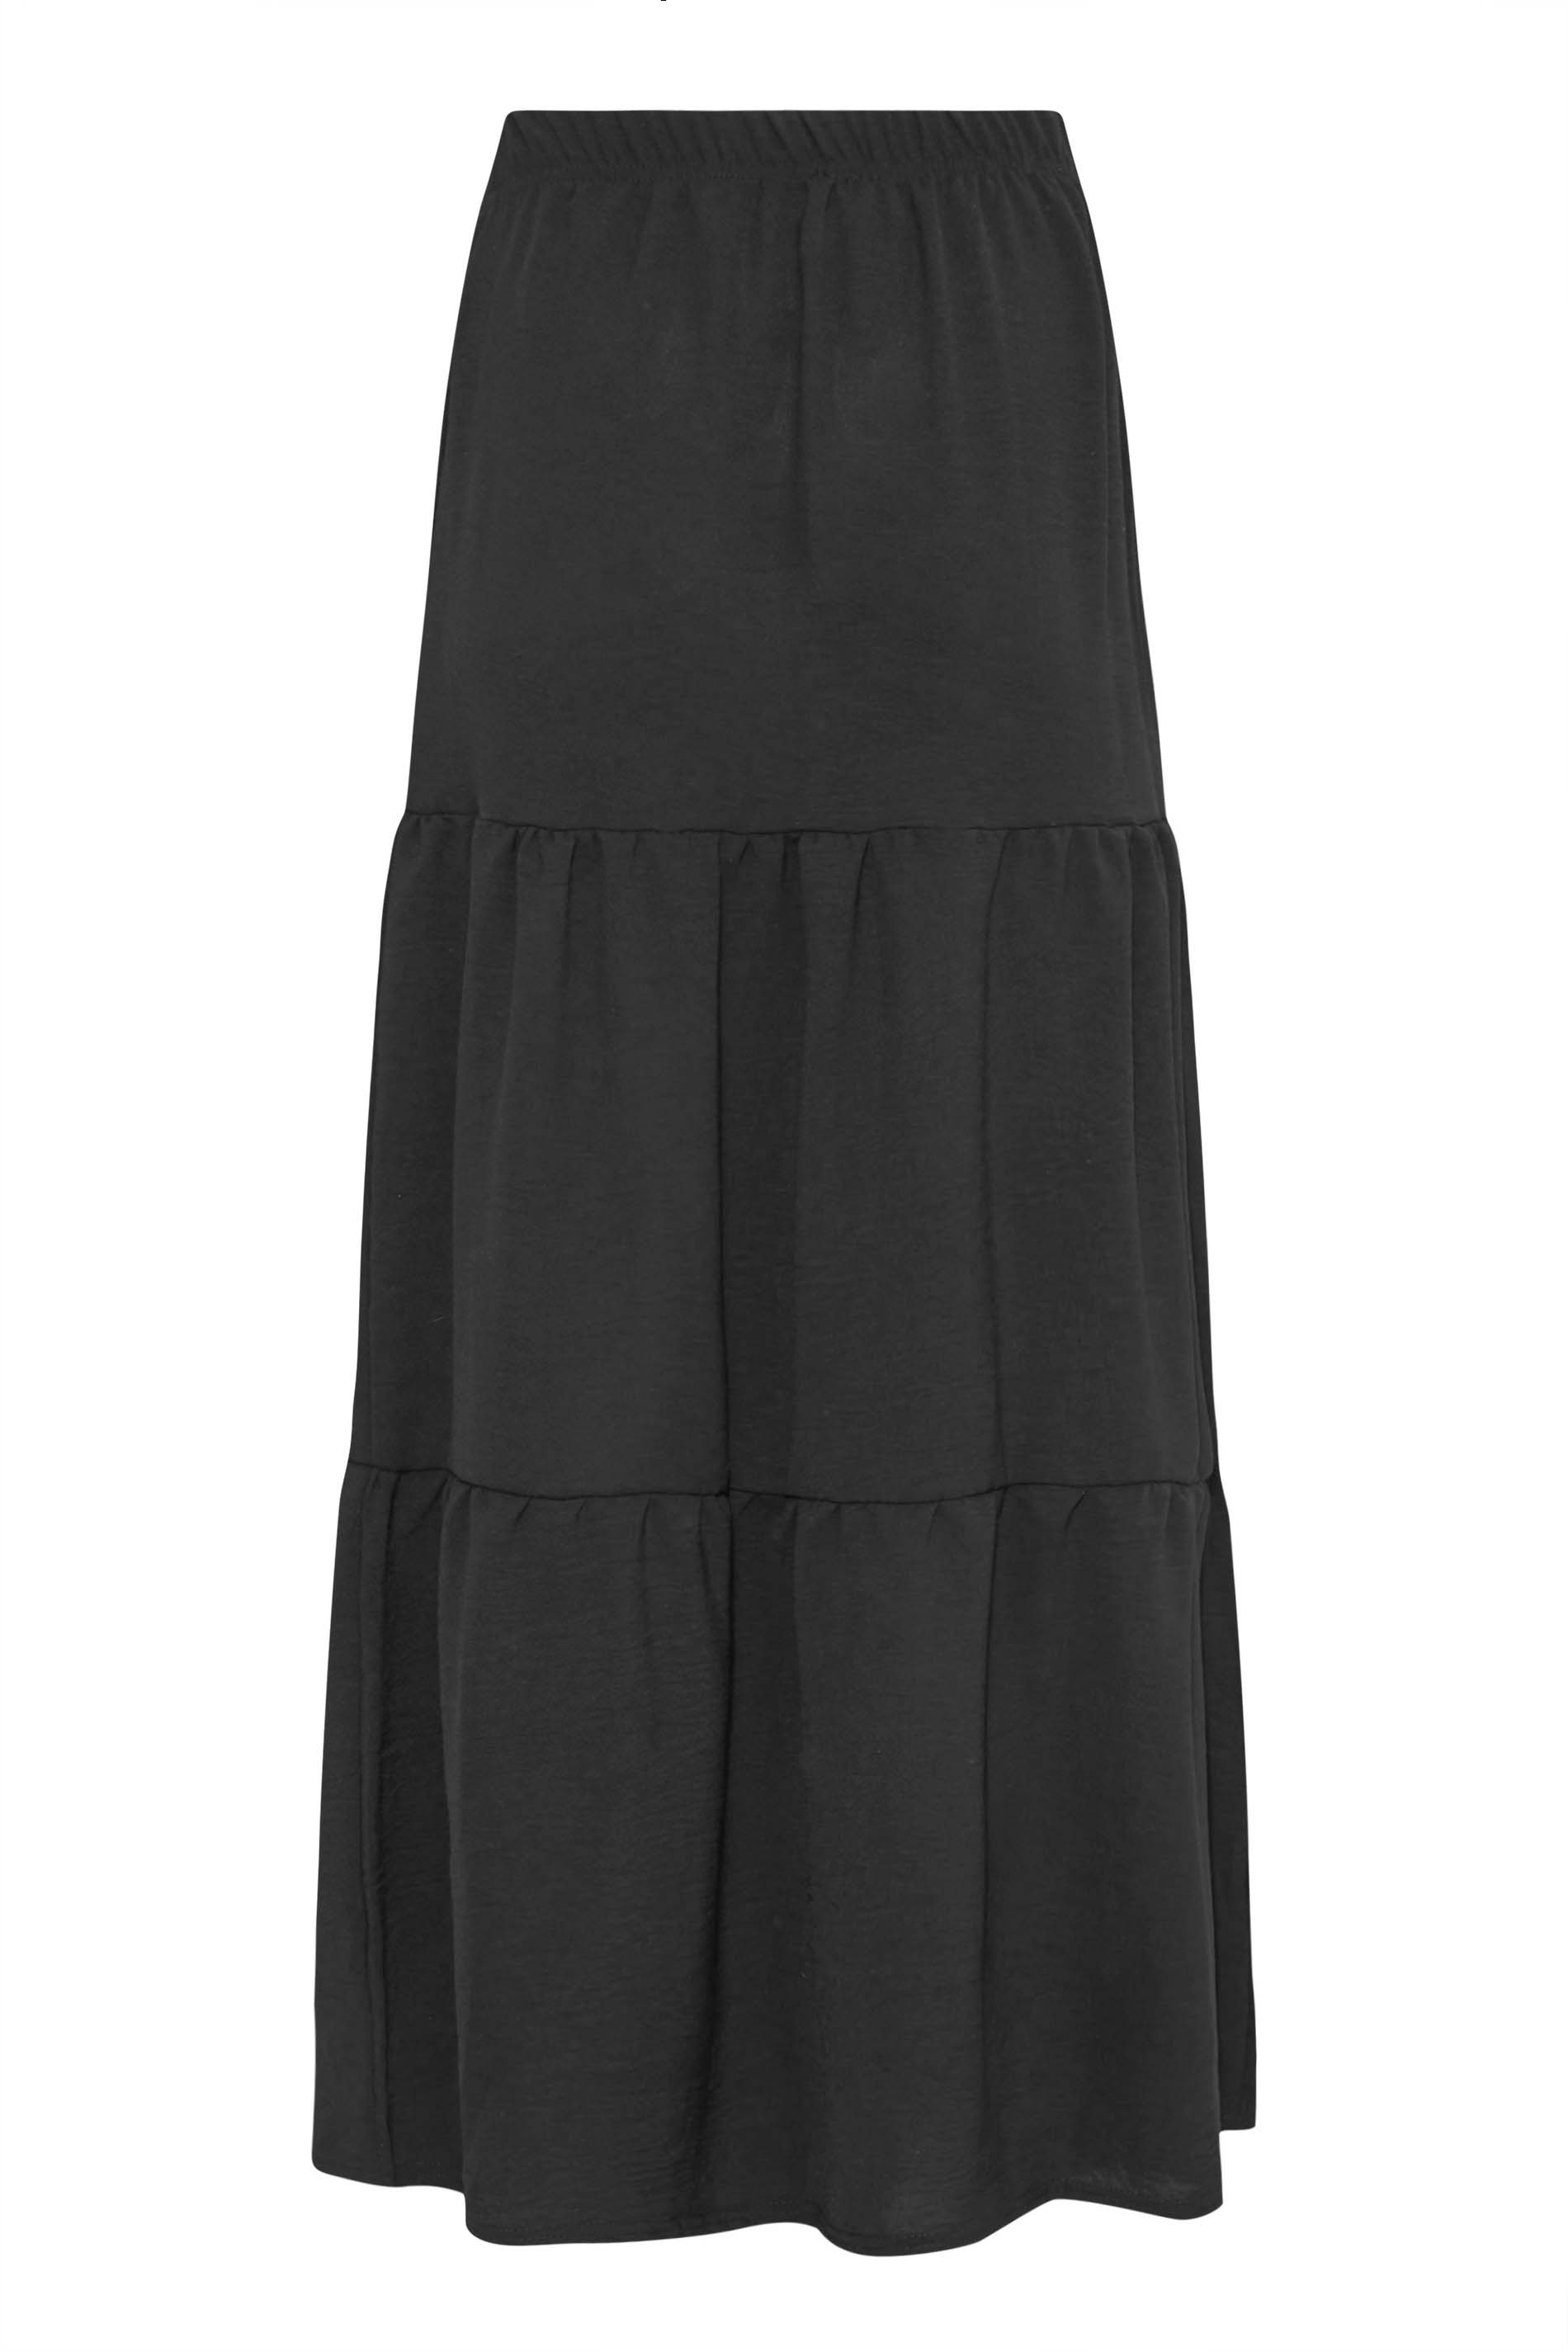 Petite Black Crepe Maxi Skirt | PixieGirl